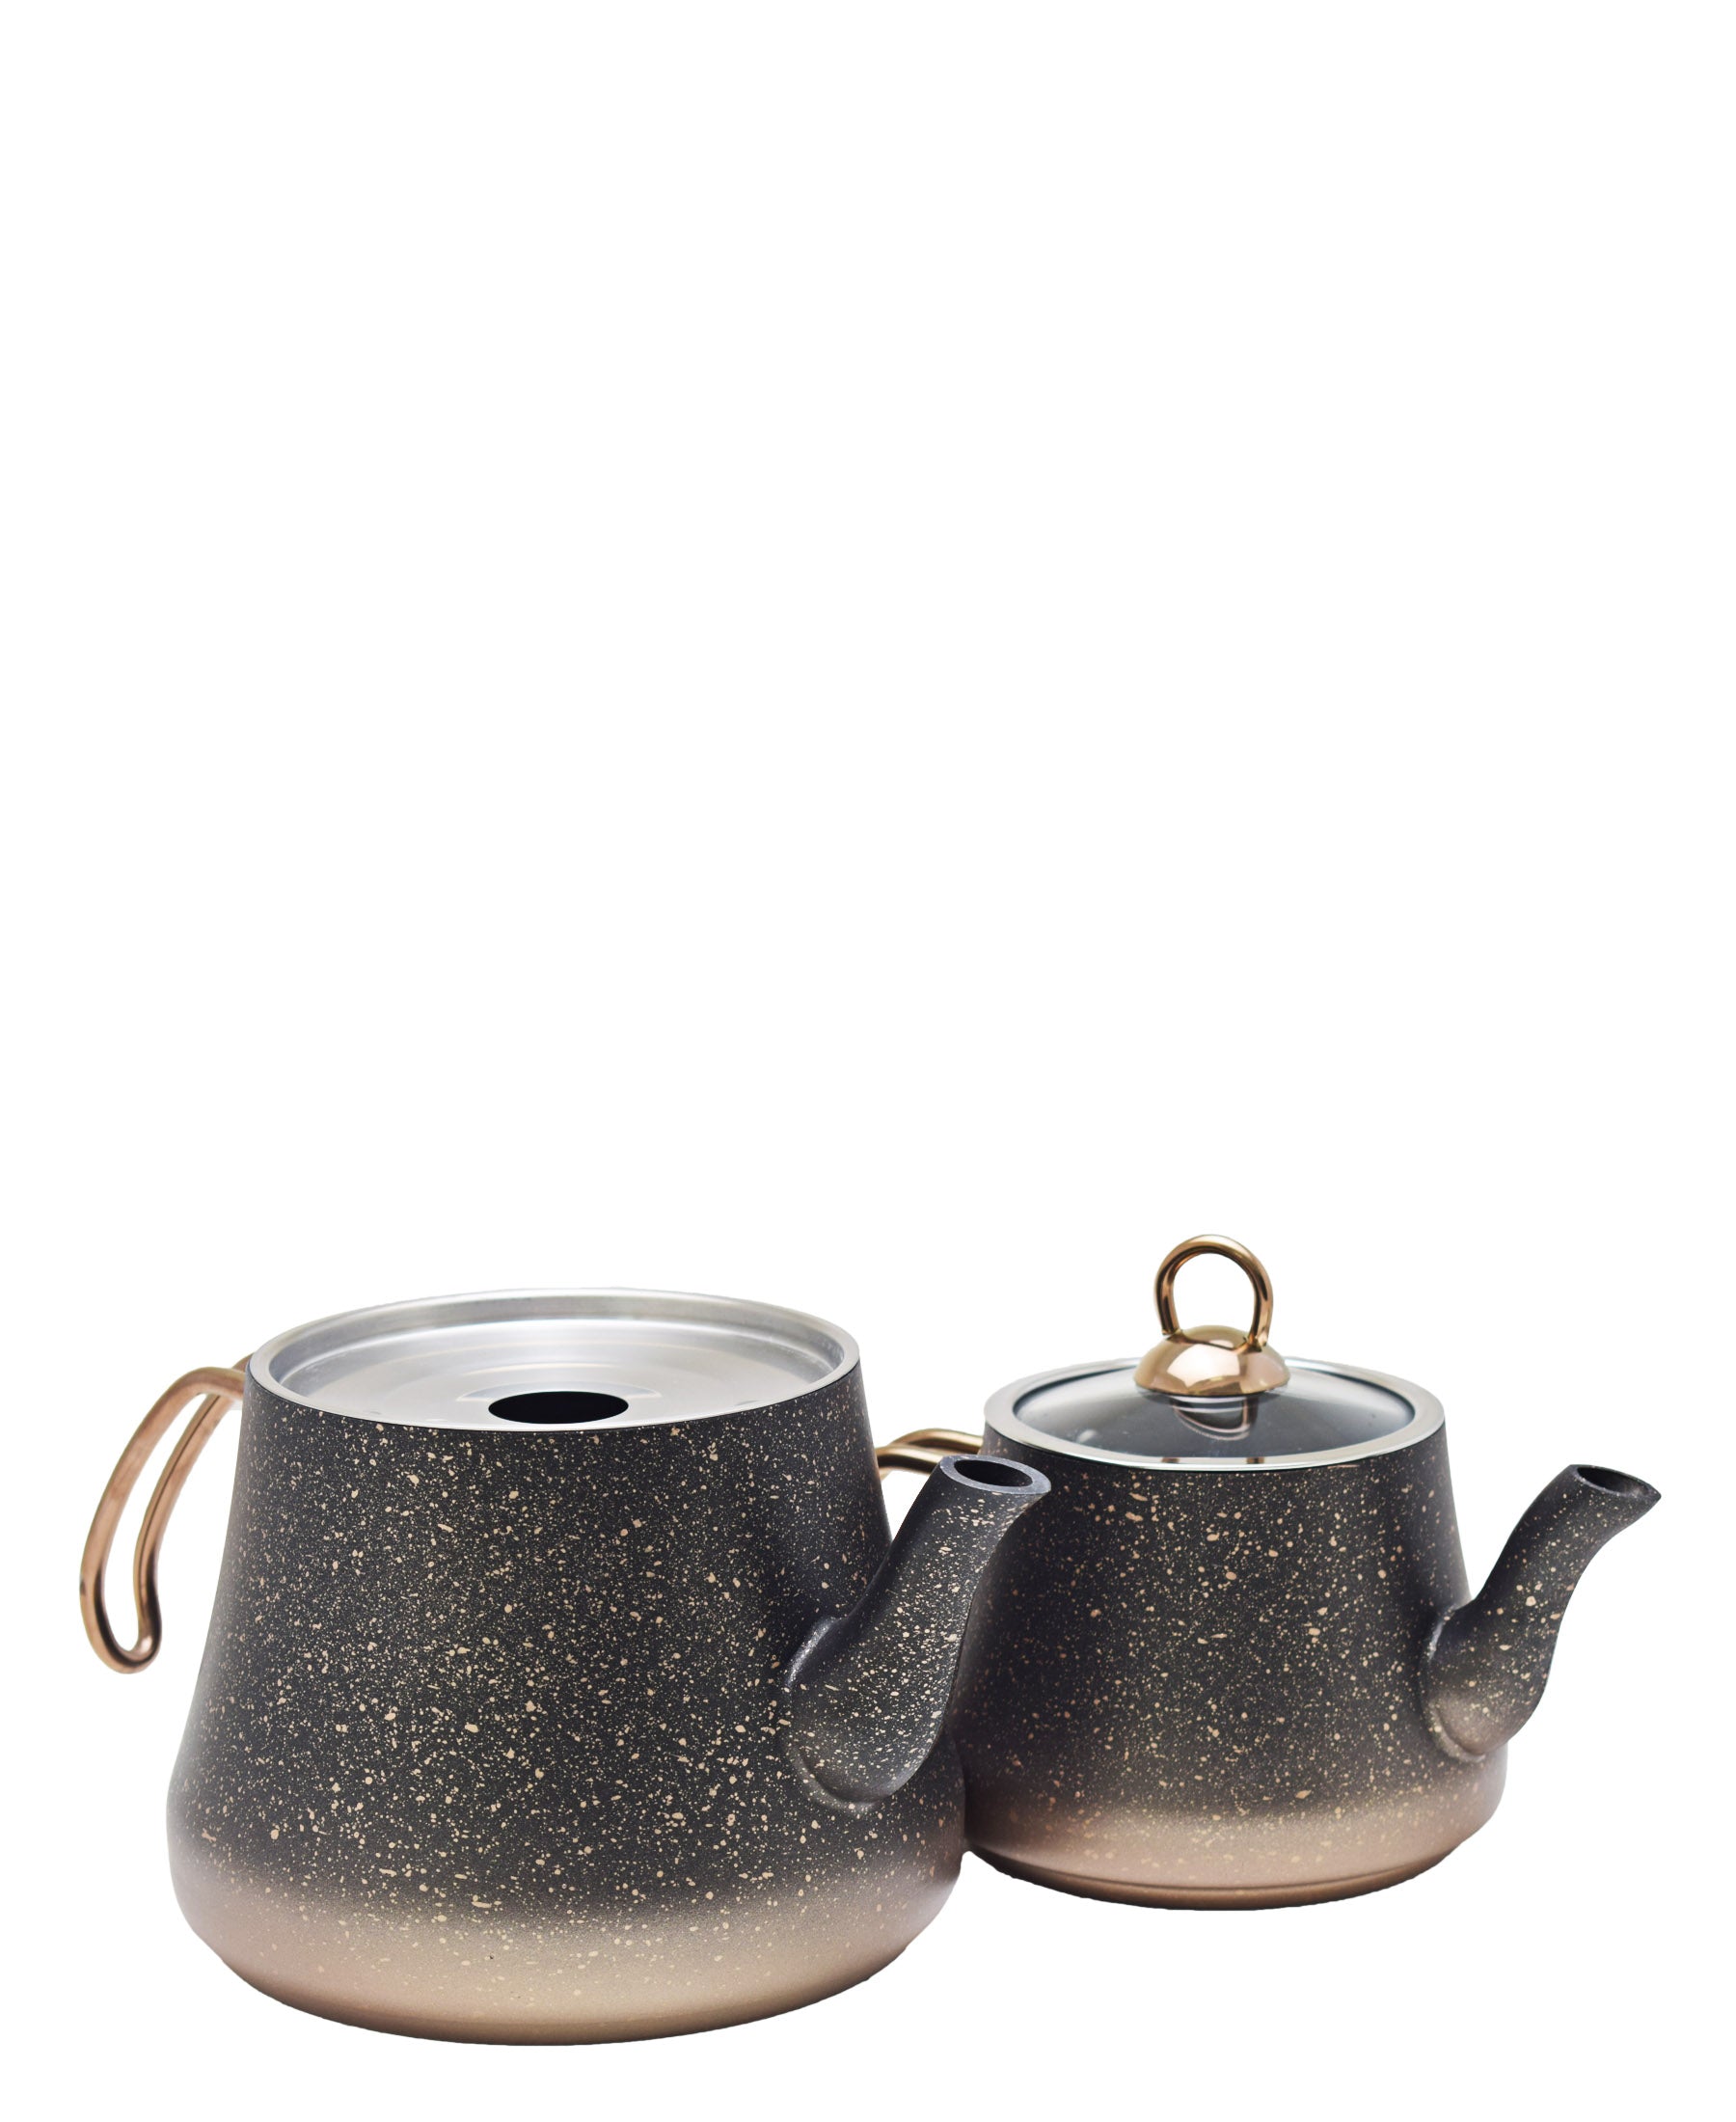 OMS Granite Double Teapot Large - Black & Copper